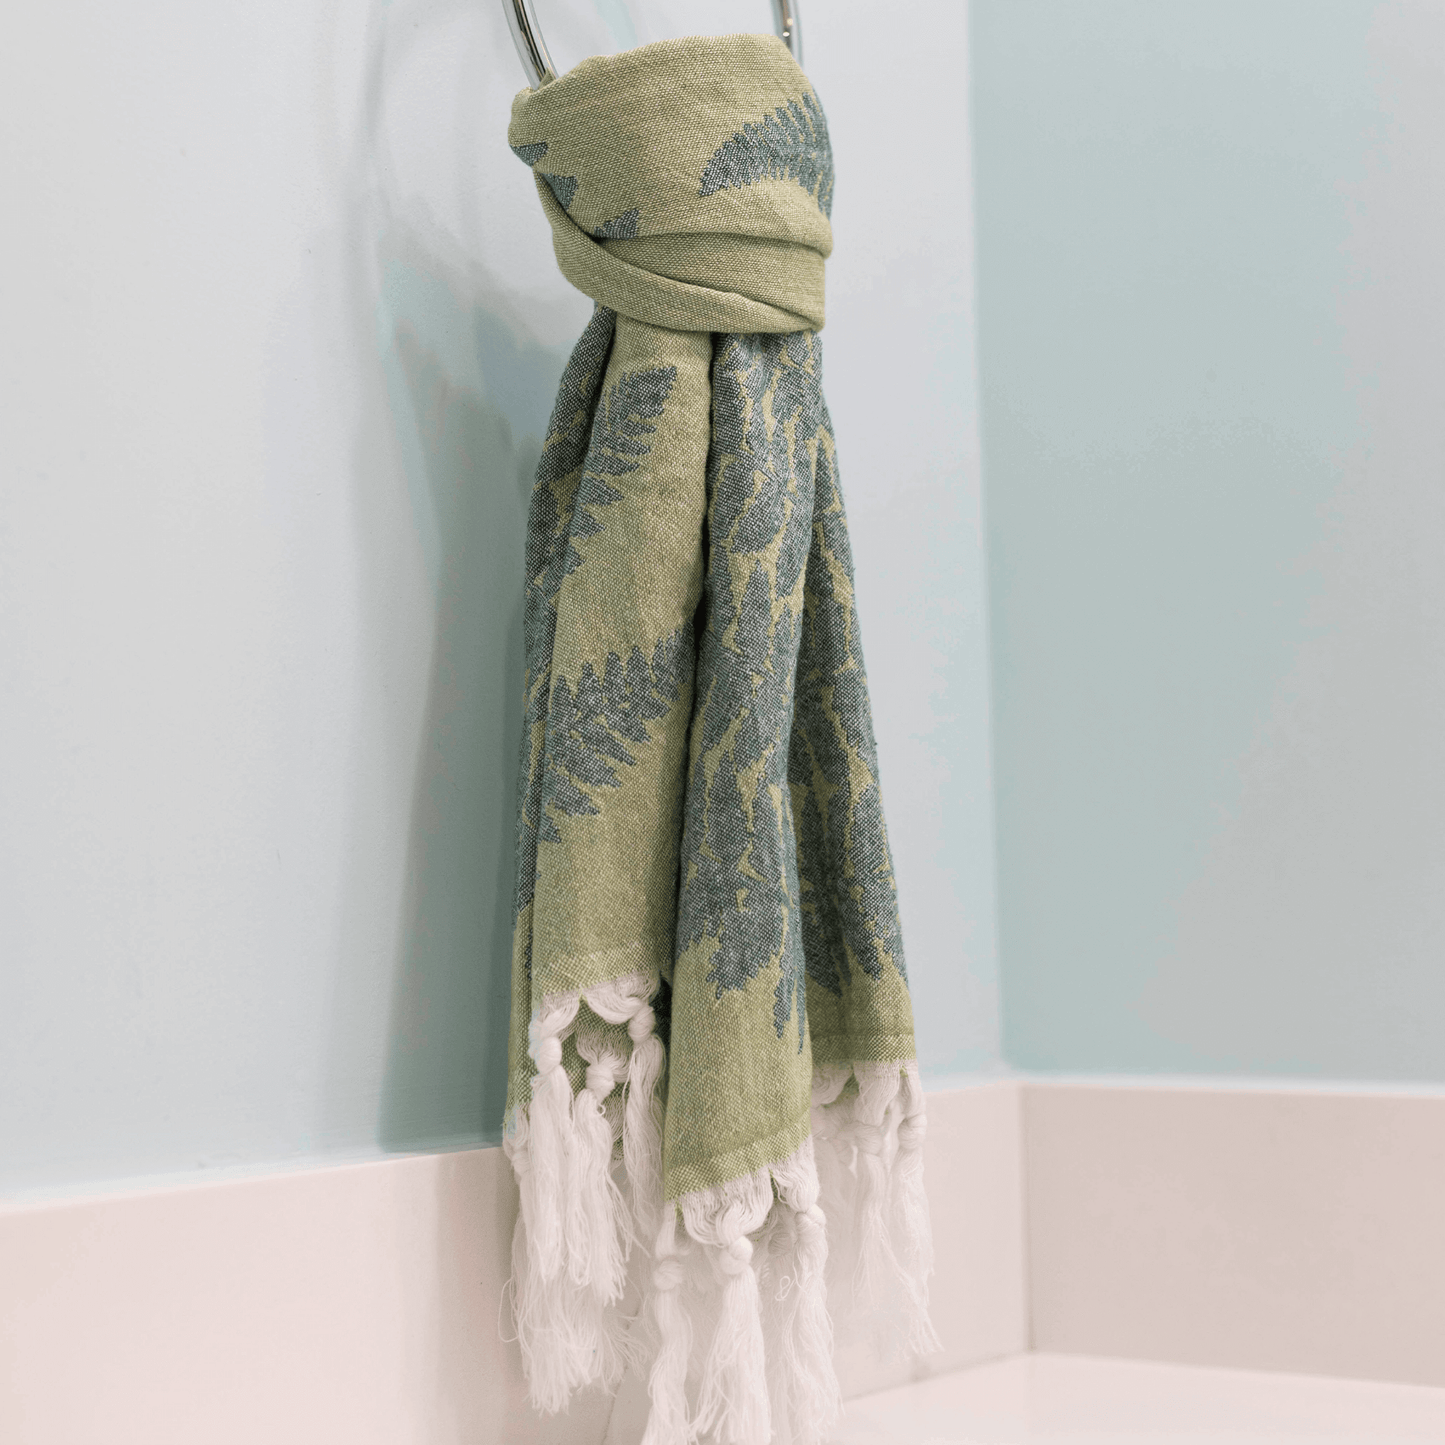 Green Turkish towel as hand towel in bath